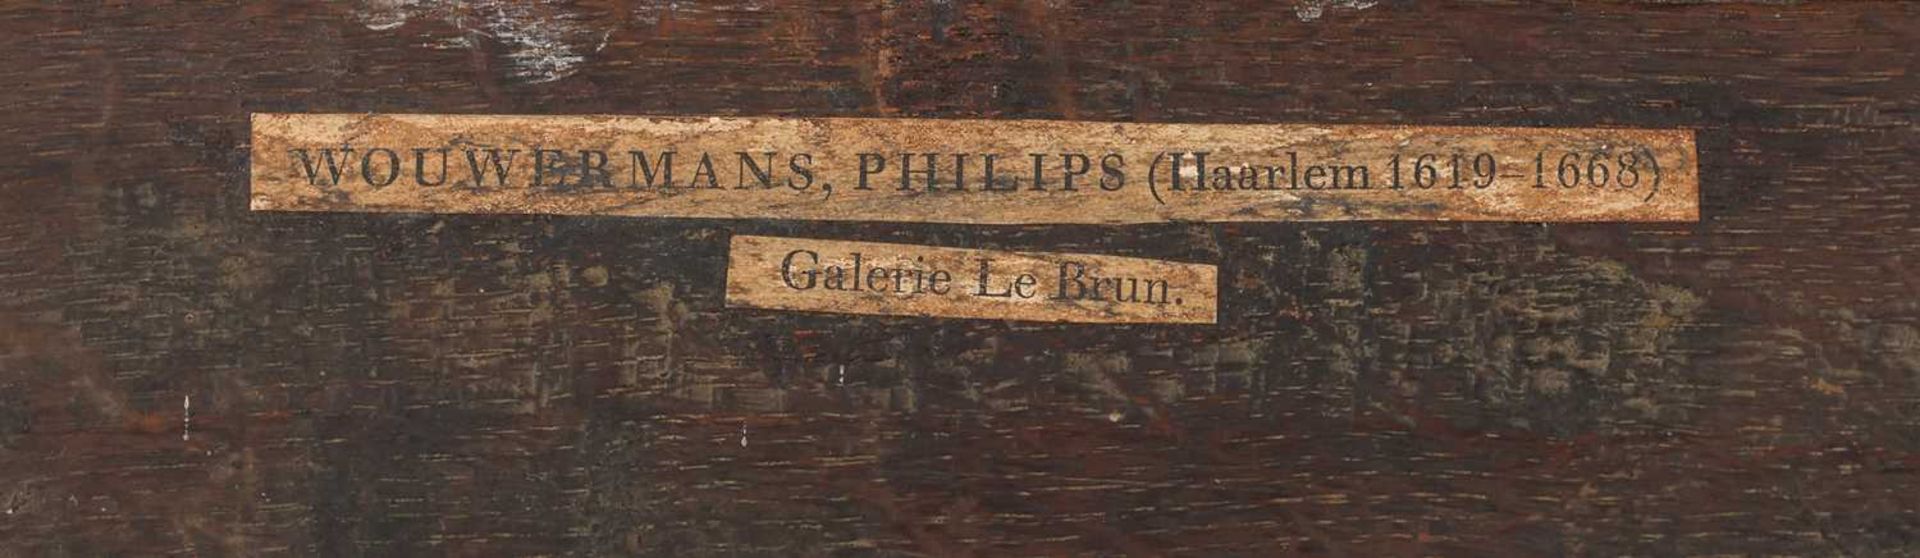 PHILIPS WOUWERMAN (1619 Haarlem - 1668 ebenda) zugeschrieben - Image 2 of 5